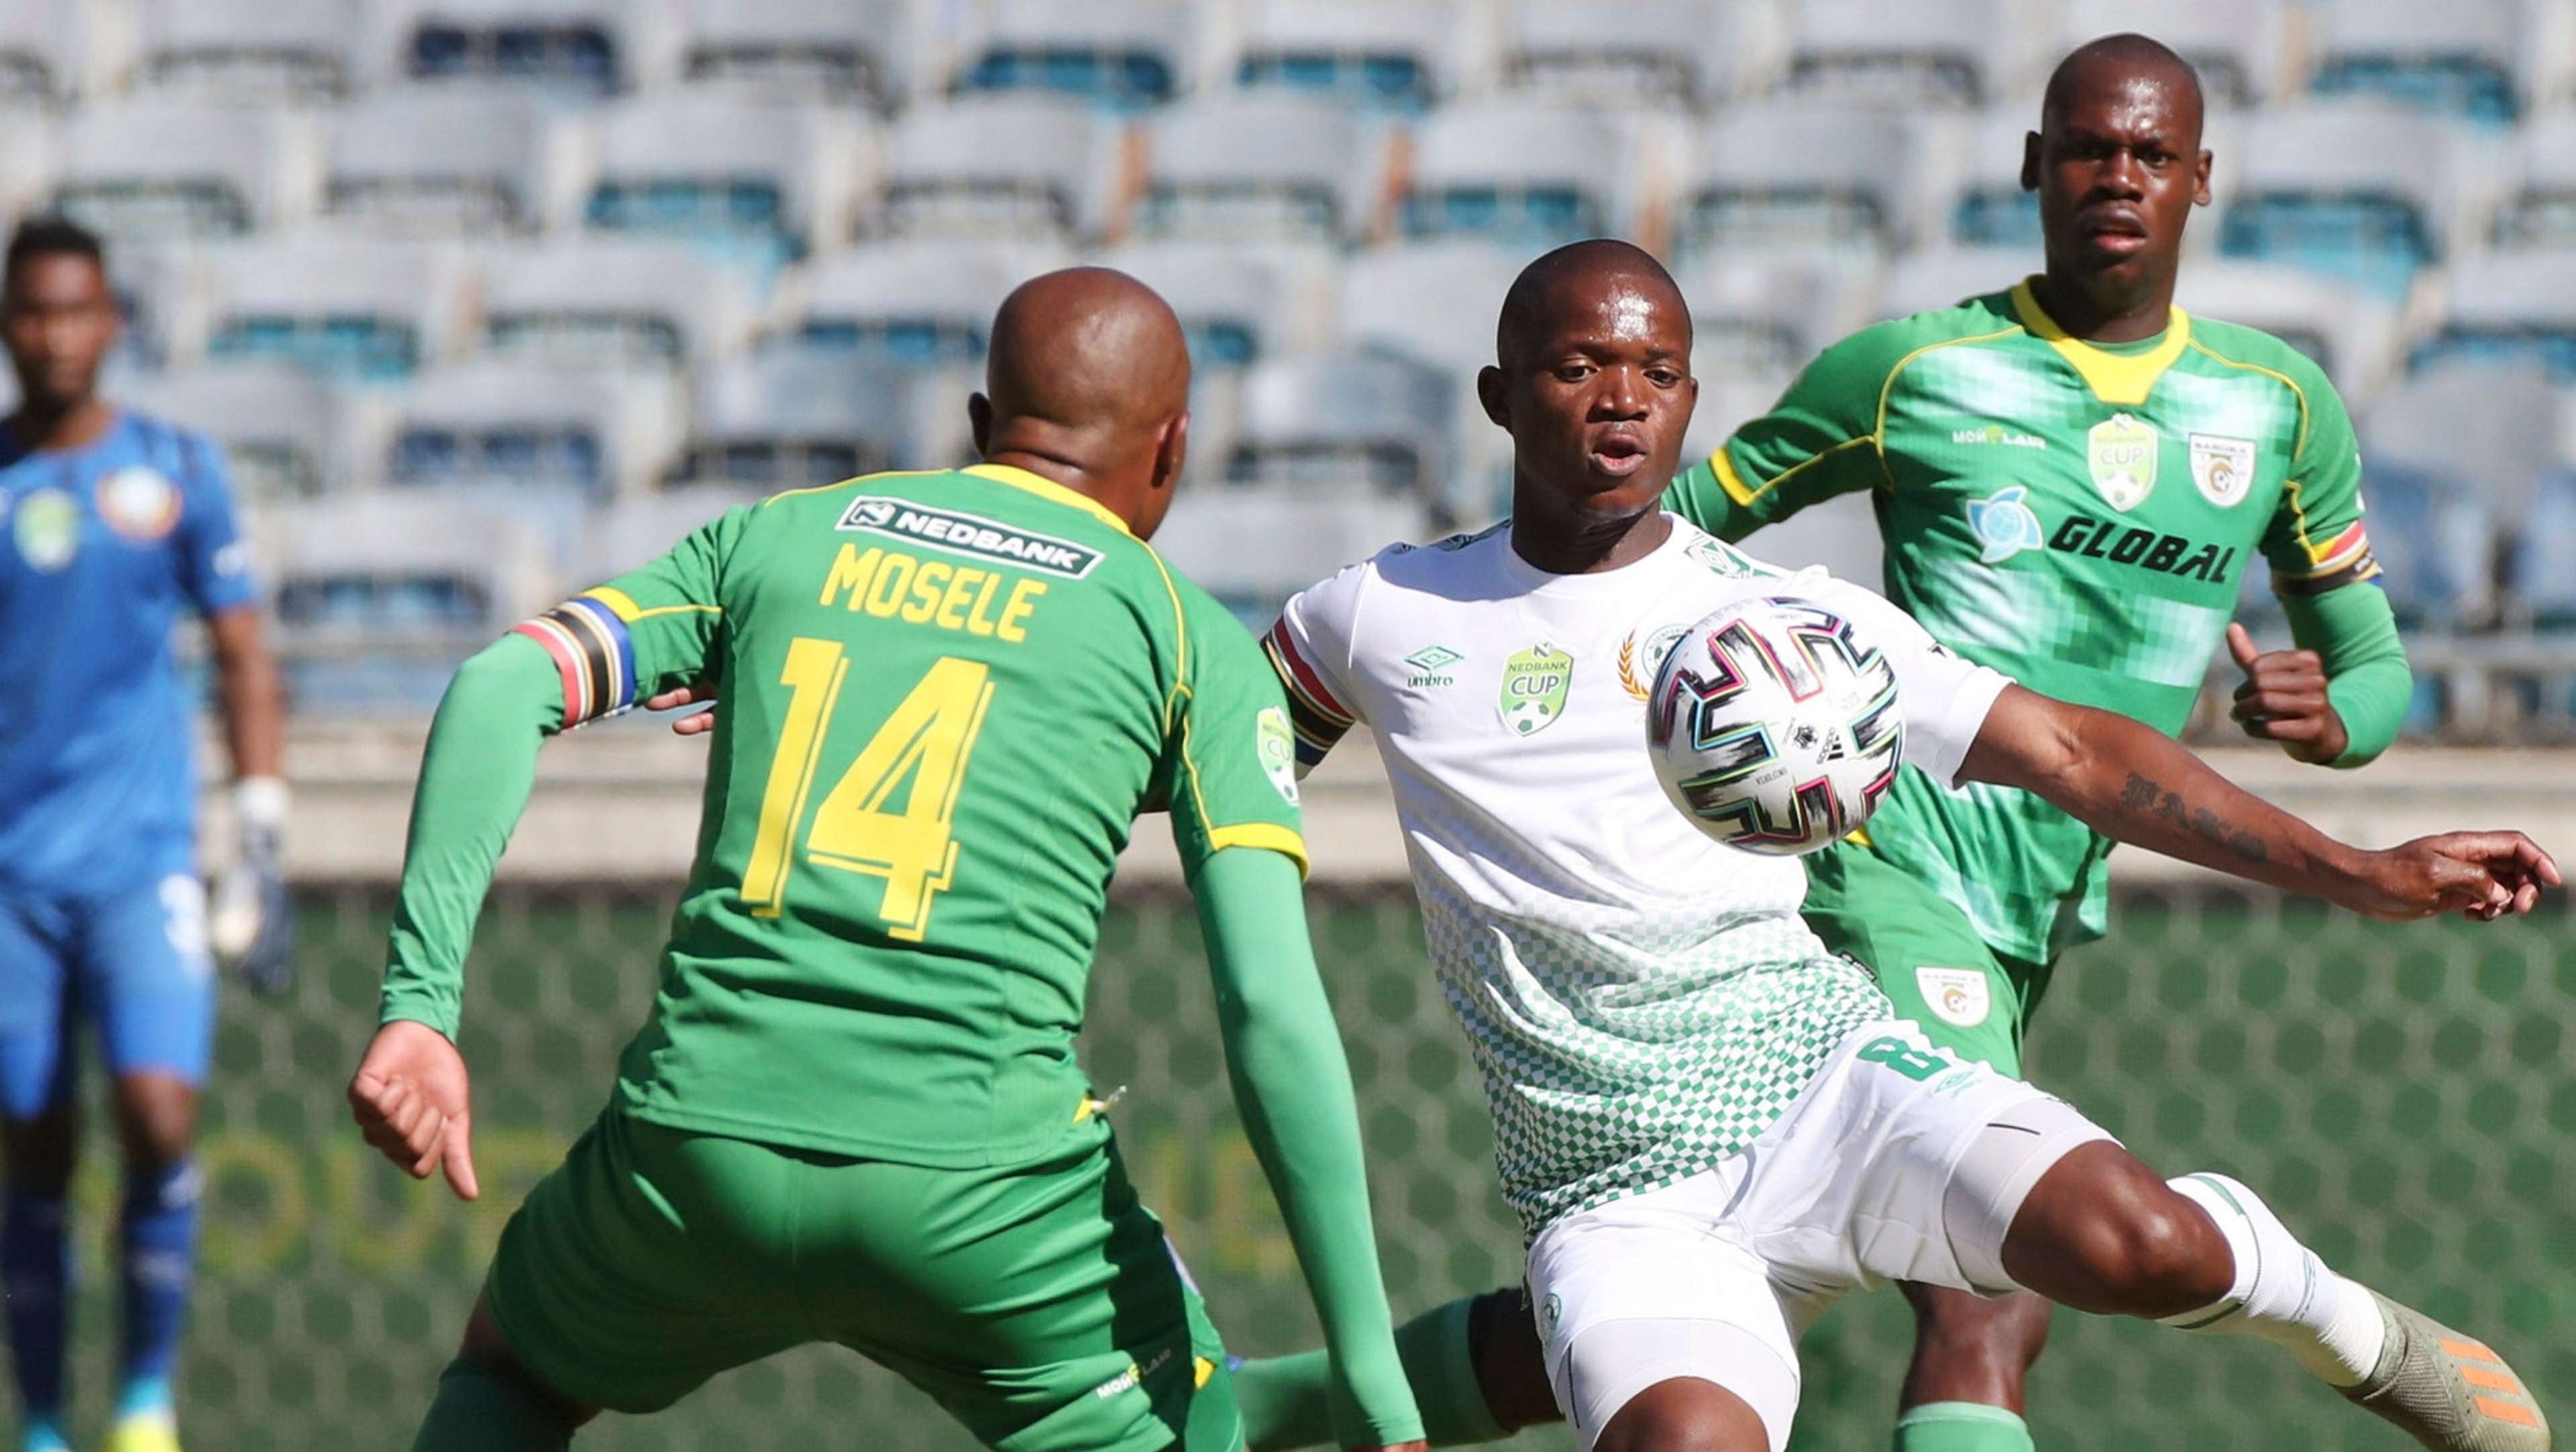 Lantshene Phalane of Bloemfontein Celtic challenged by Goodman Mosele of Baroka FC, August 2020